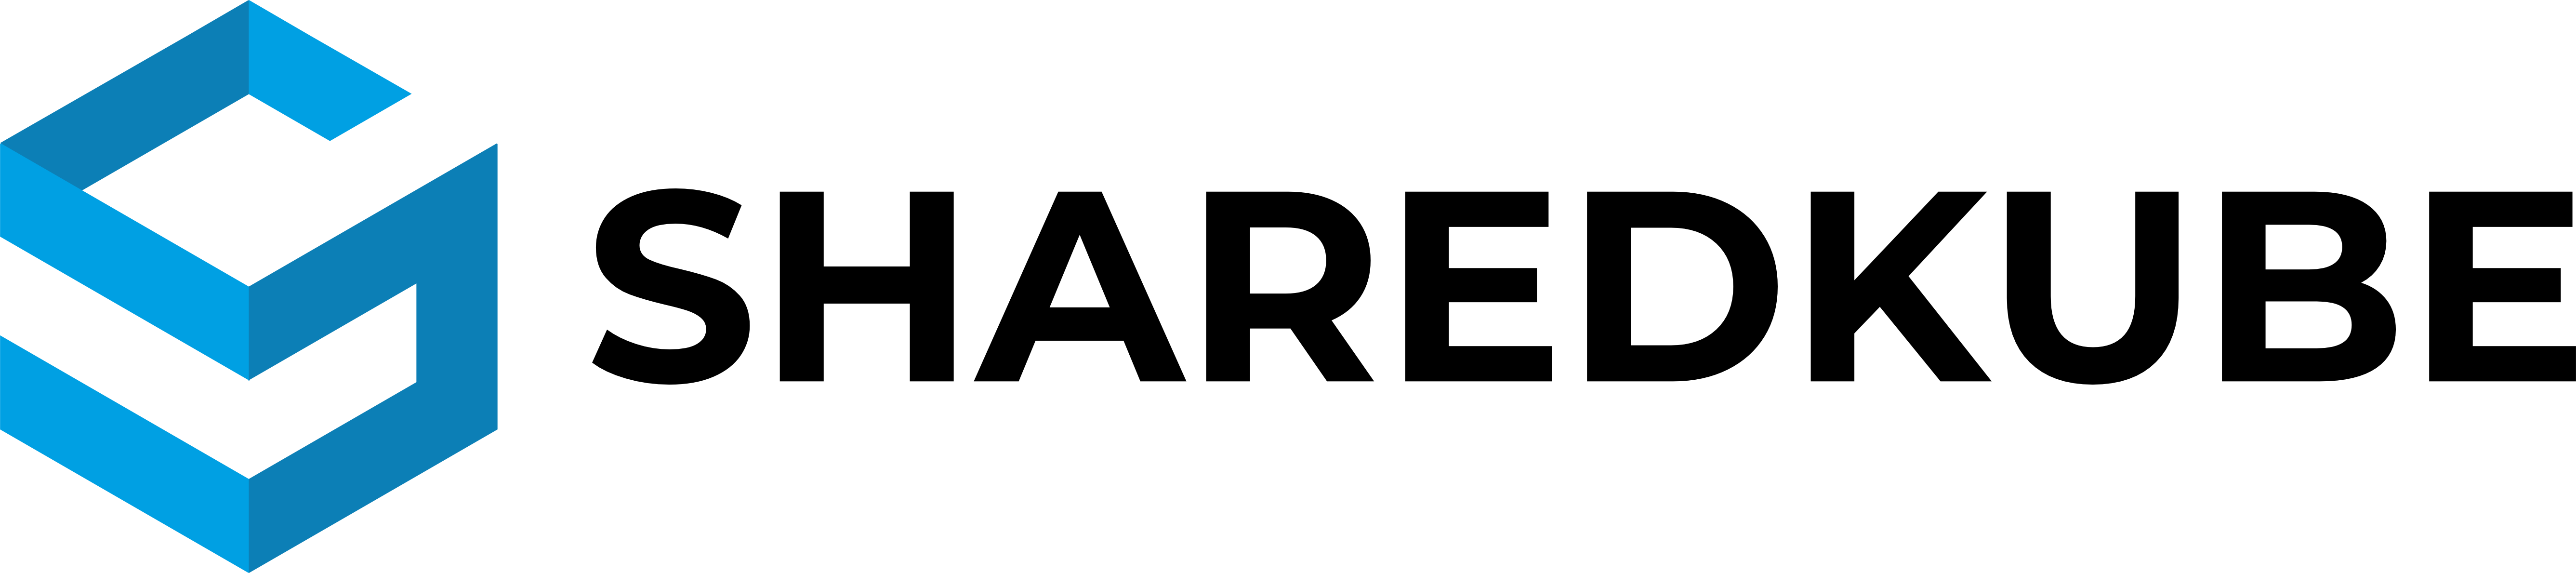 Sharedkube Logo